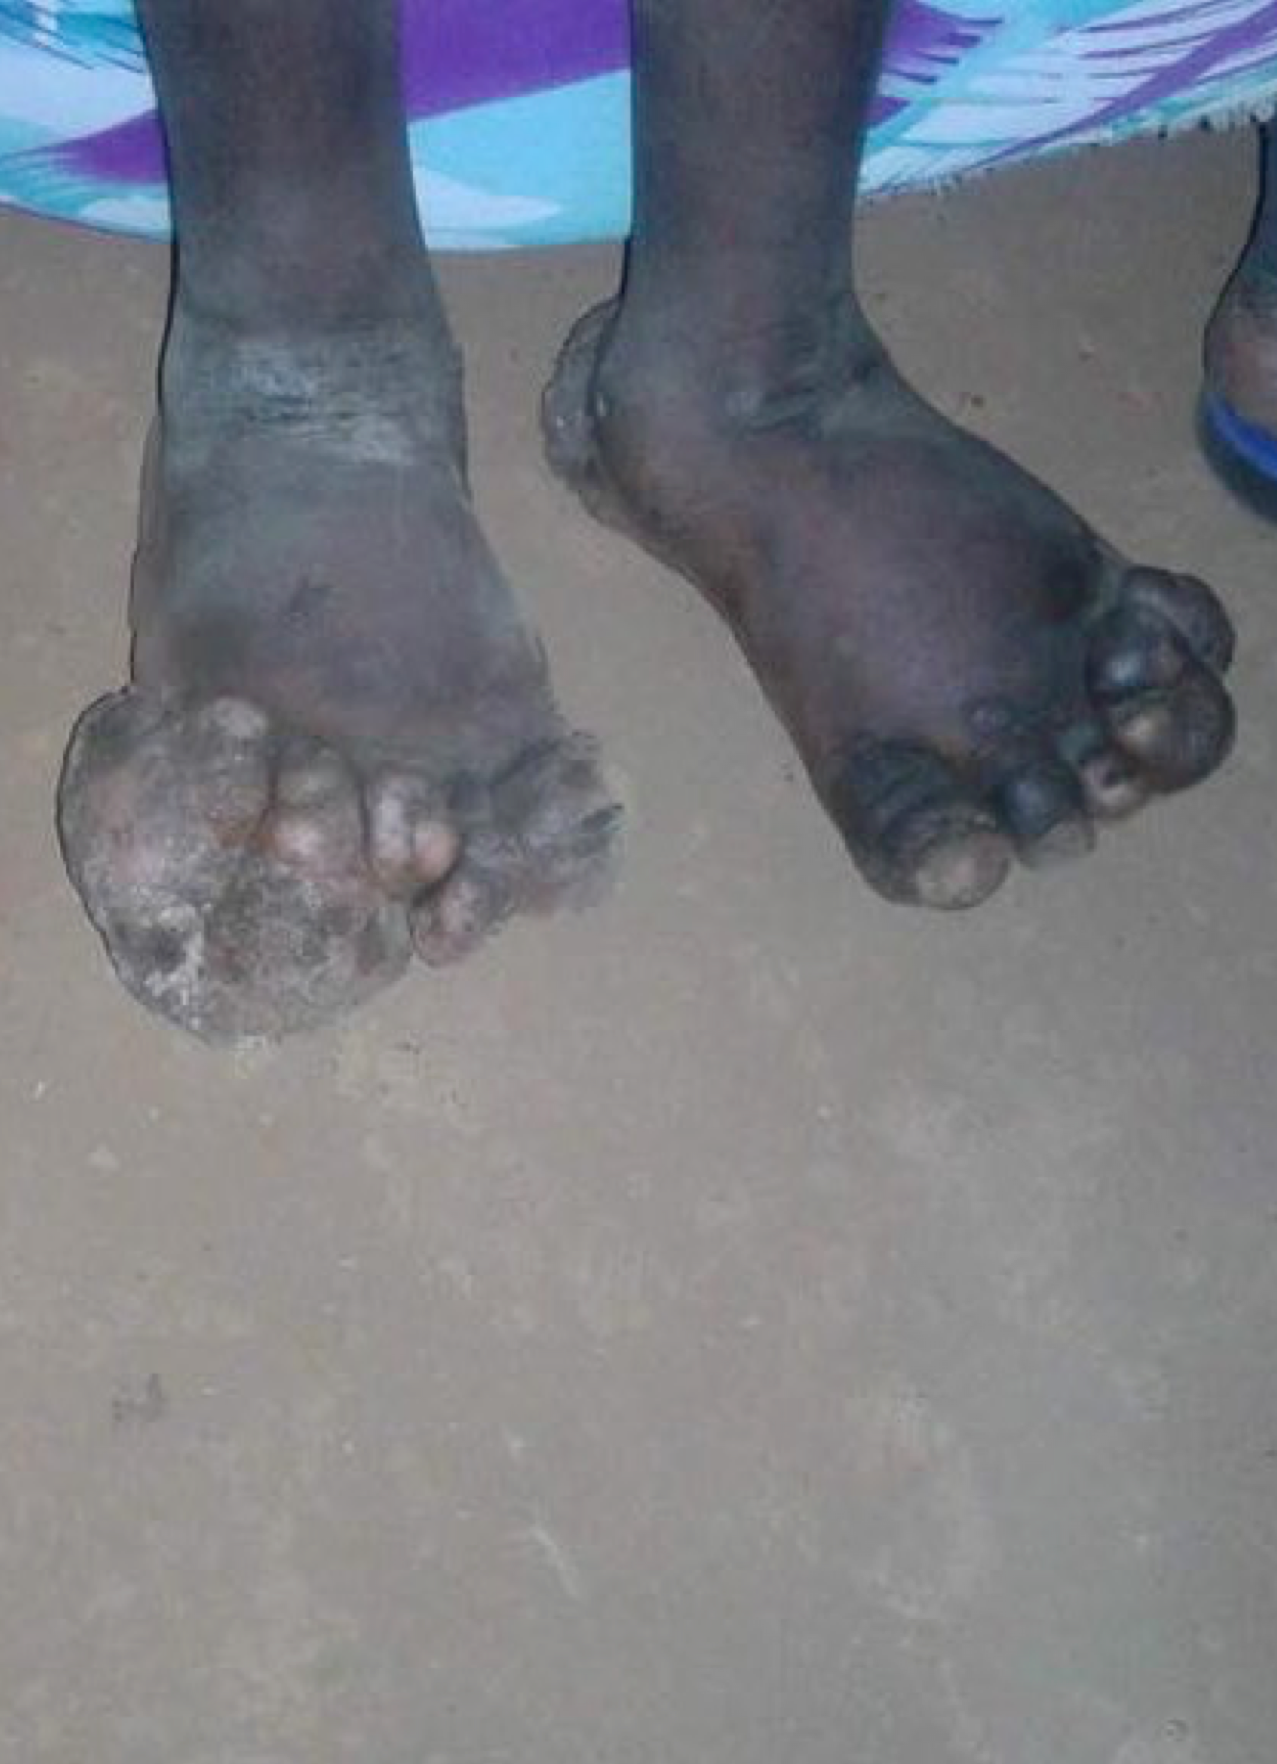 sores feet foot shoes shoe help project home of hope homeofhope brian thomson rwanda kenya congo drc africa sponsor sponsorship donate donation